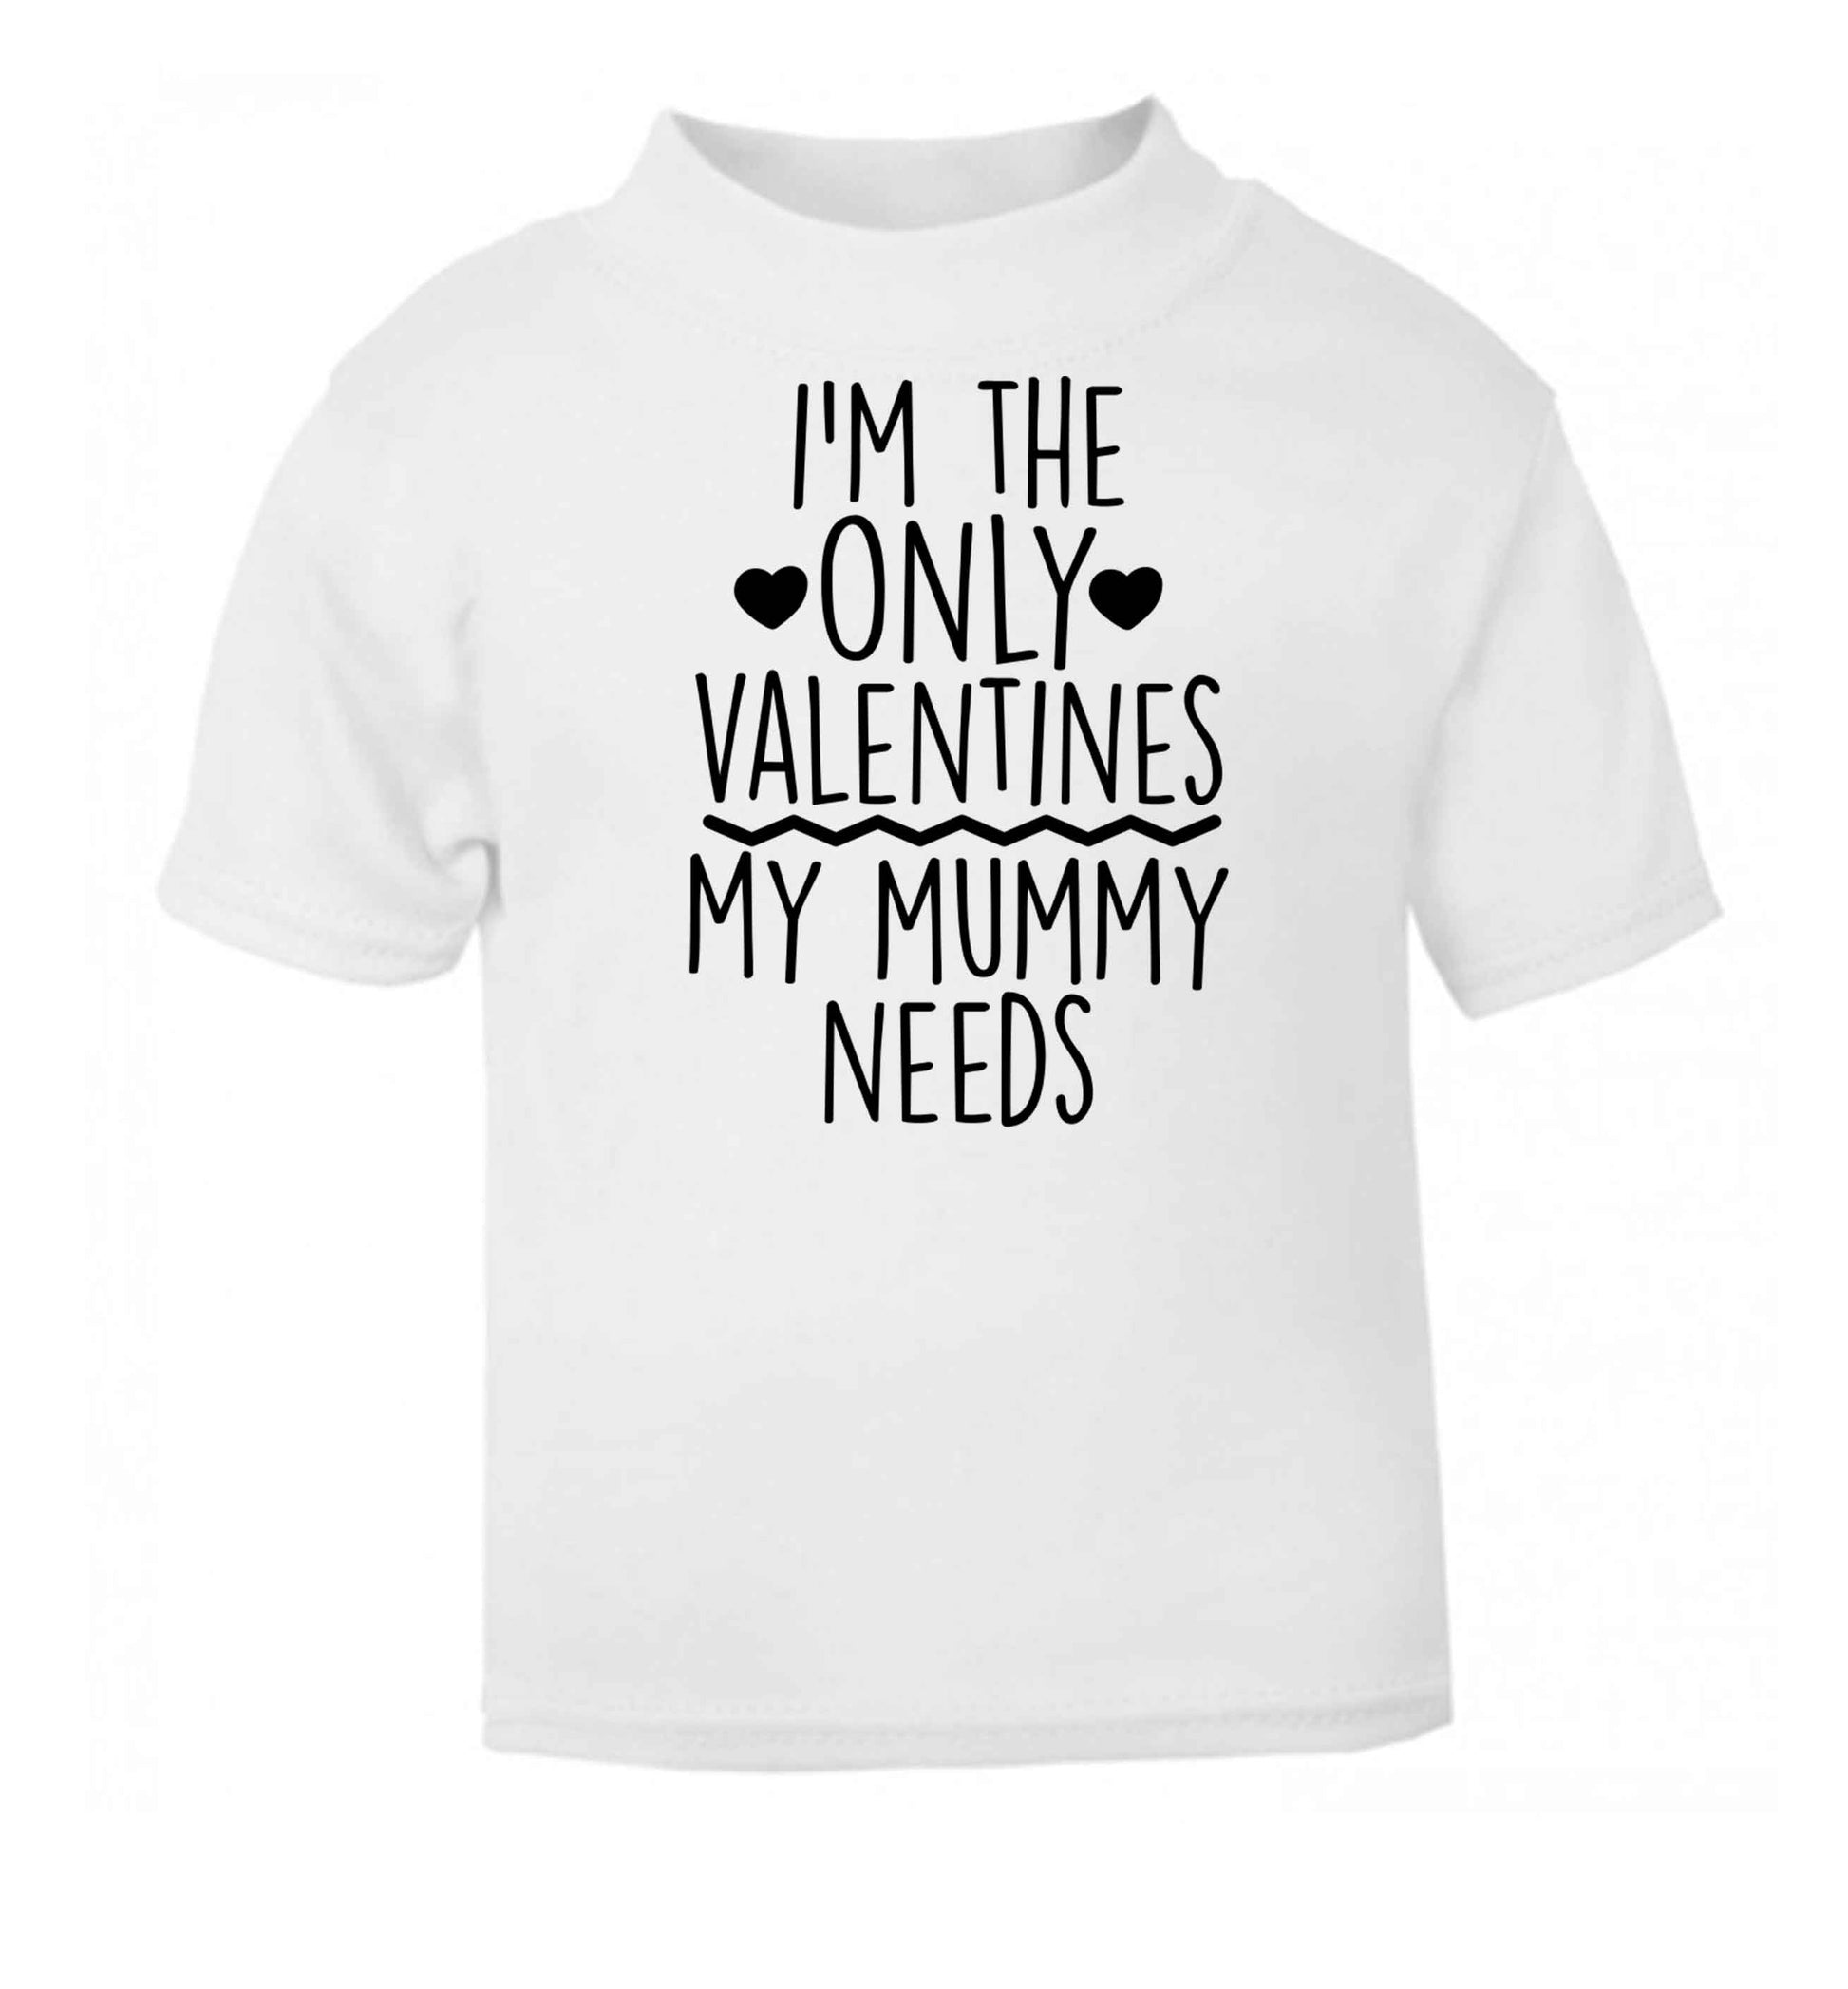 I'm the only valentines my mummy needs white baby toddler Tshirt 2 Years